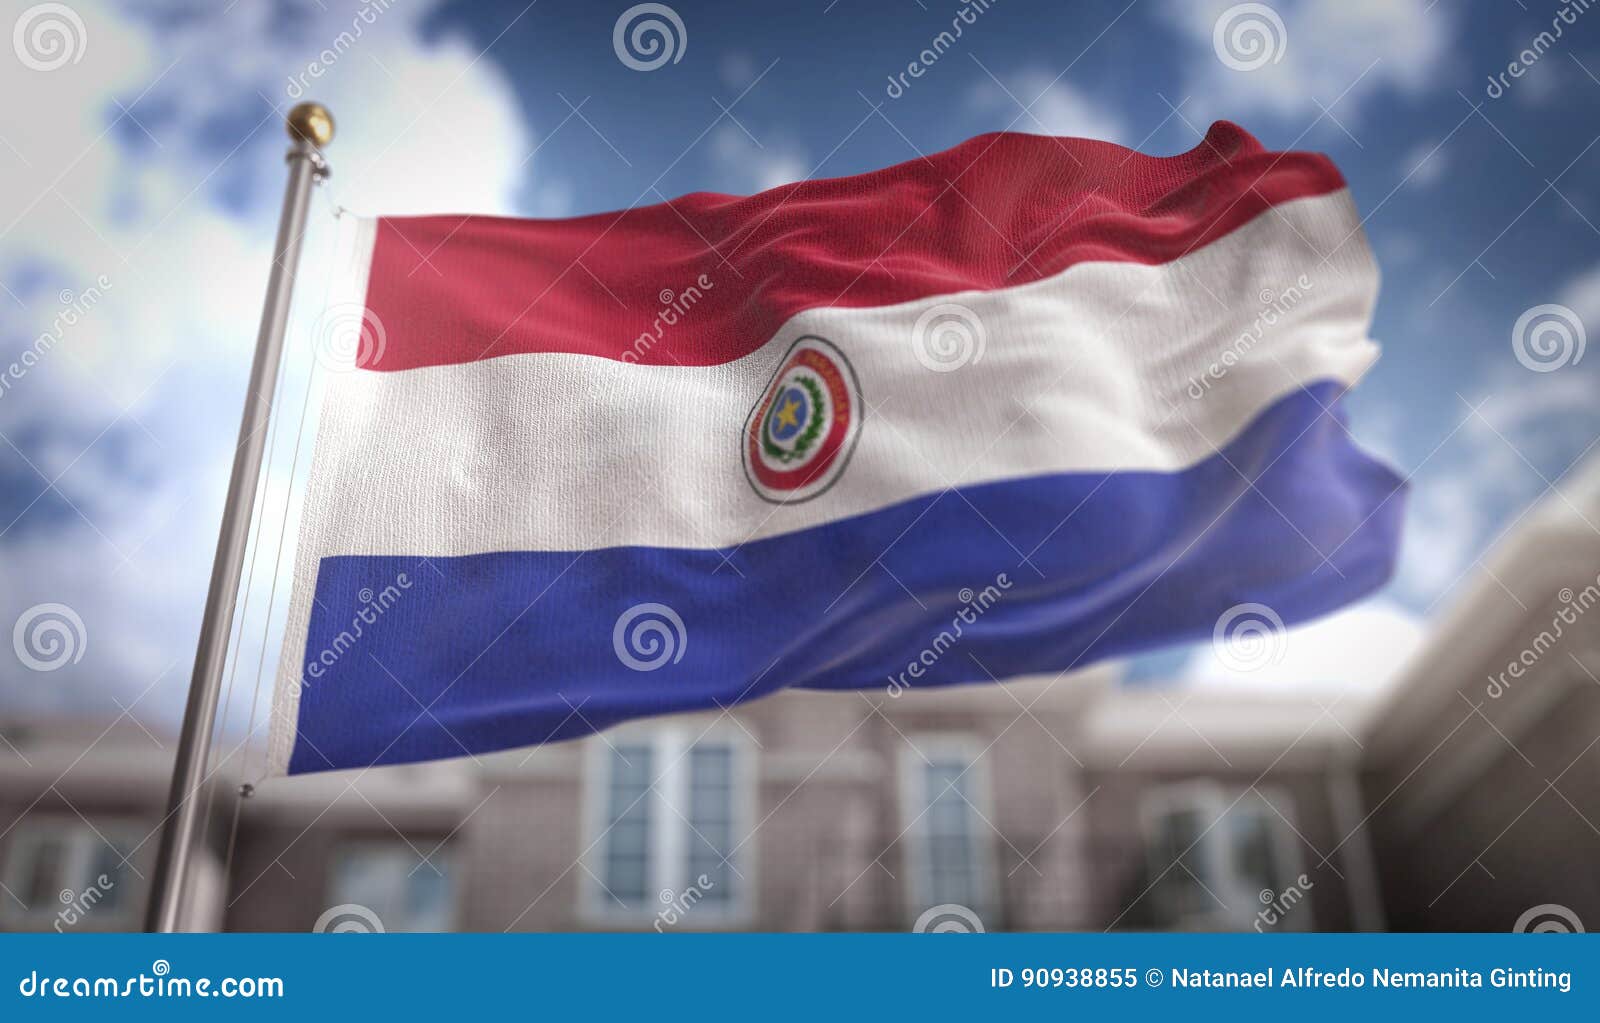 paraguay flag 3d rendering on blue sky building background